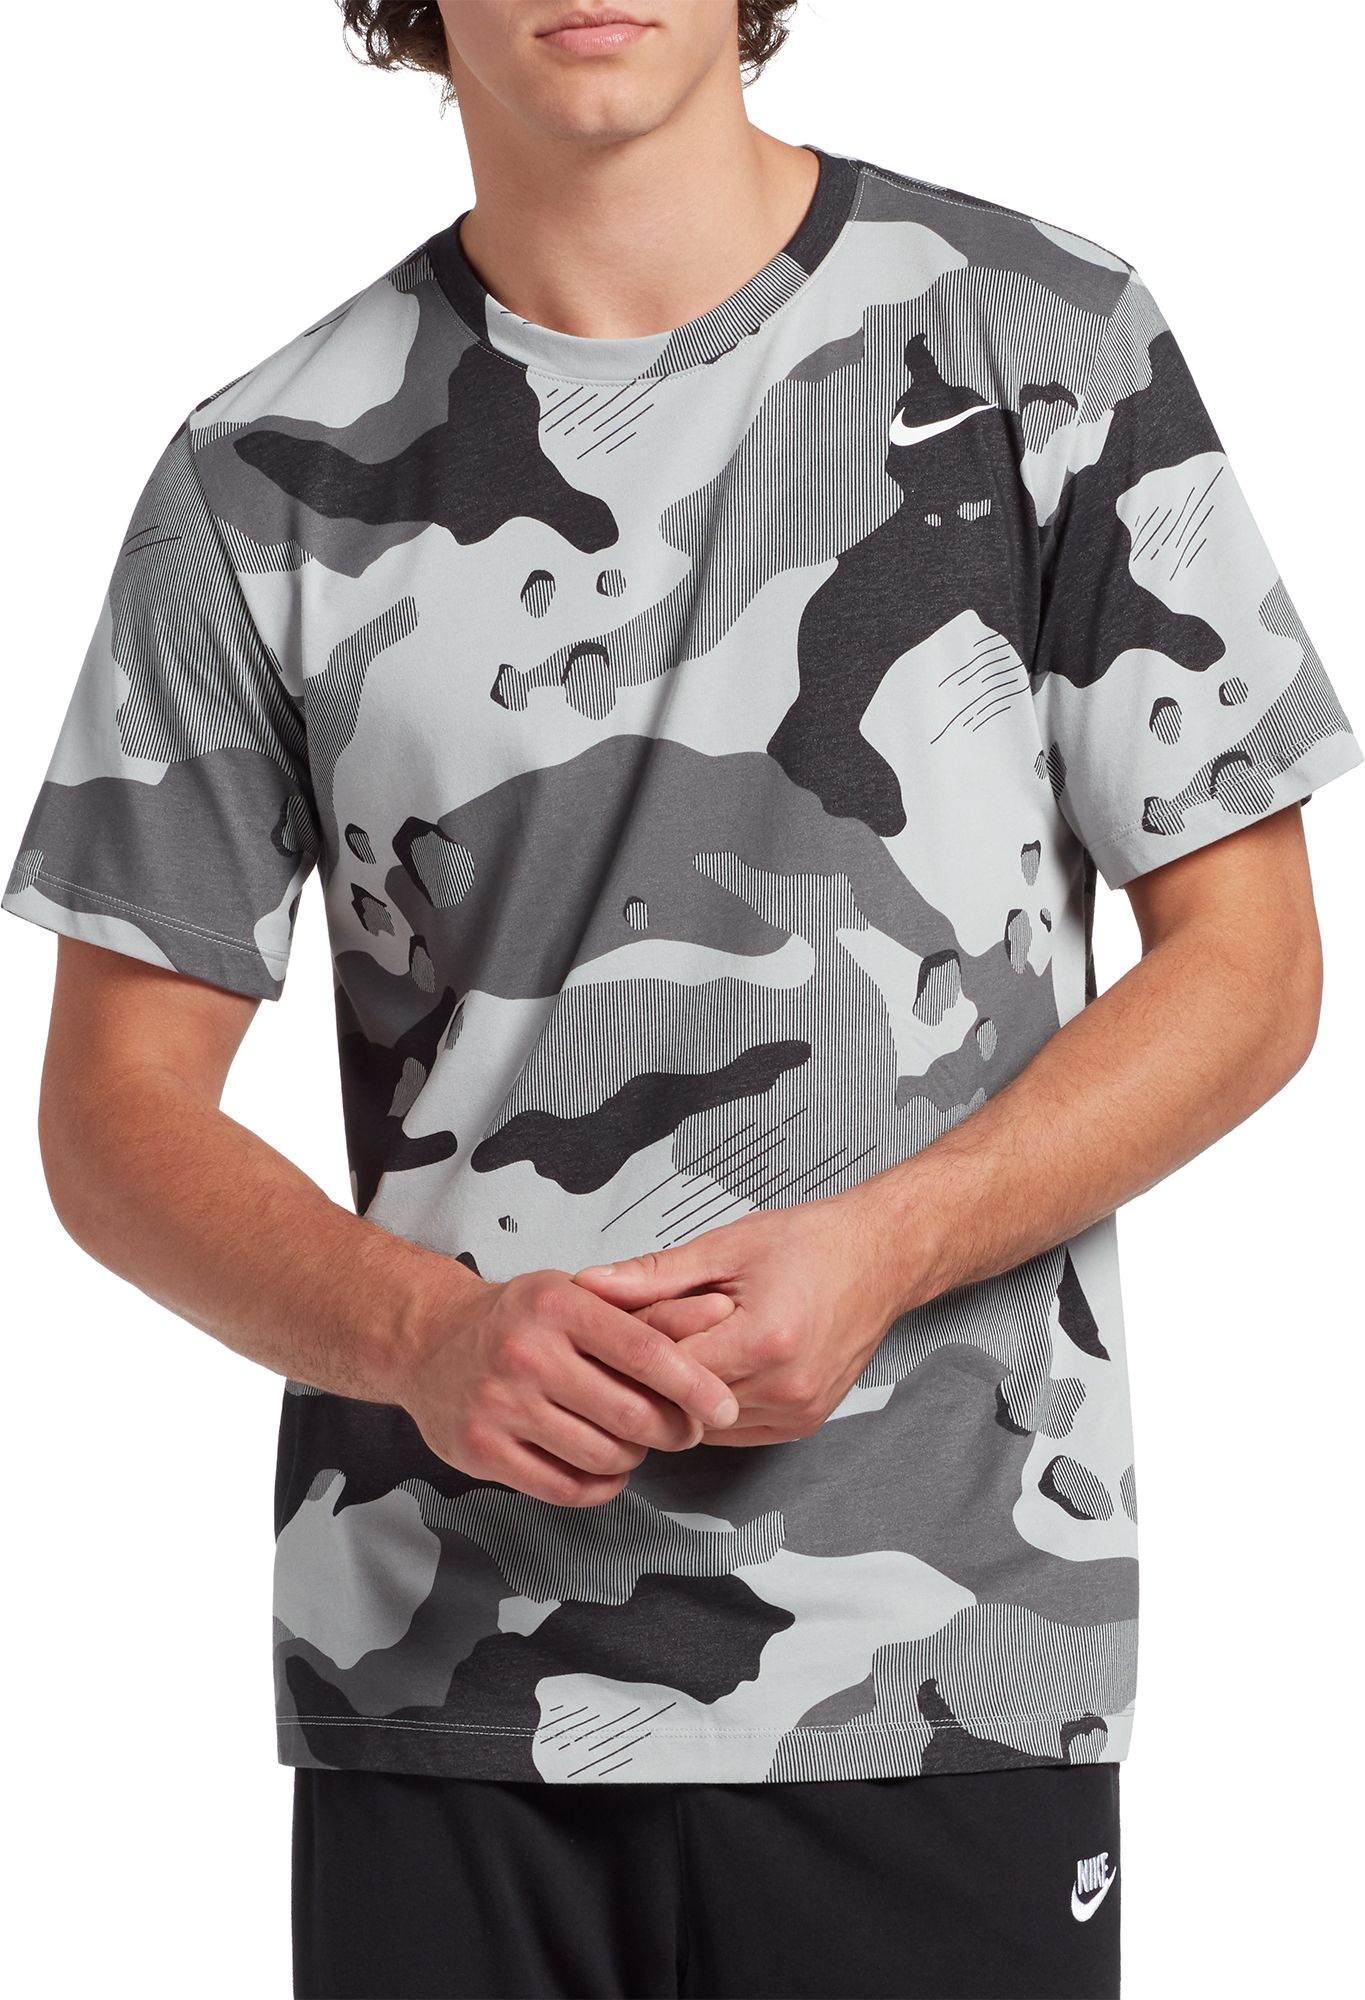 Nike Men's Dri-FIT Camo Training T-Shirt - .97 - .97